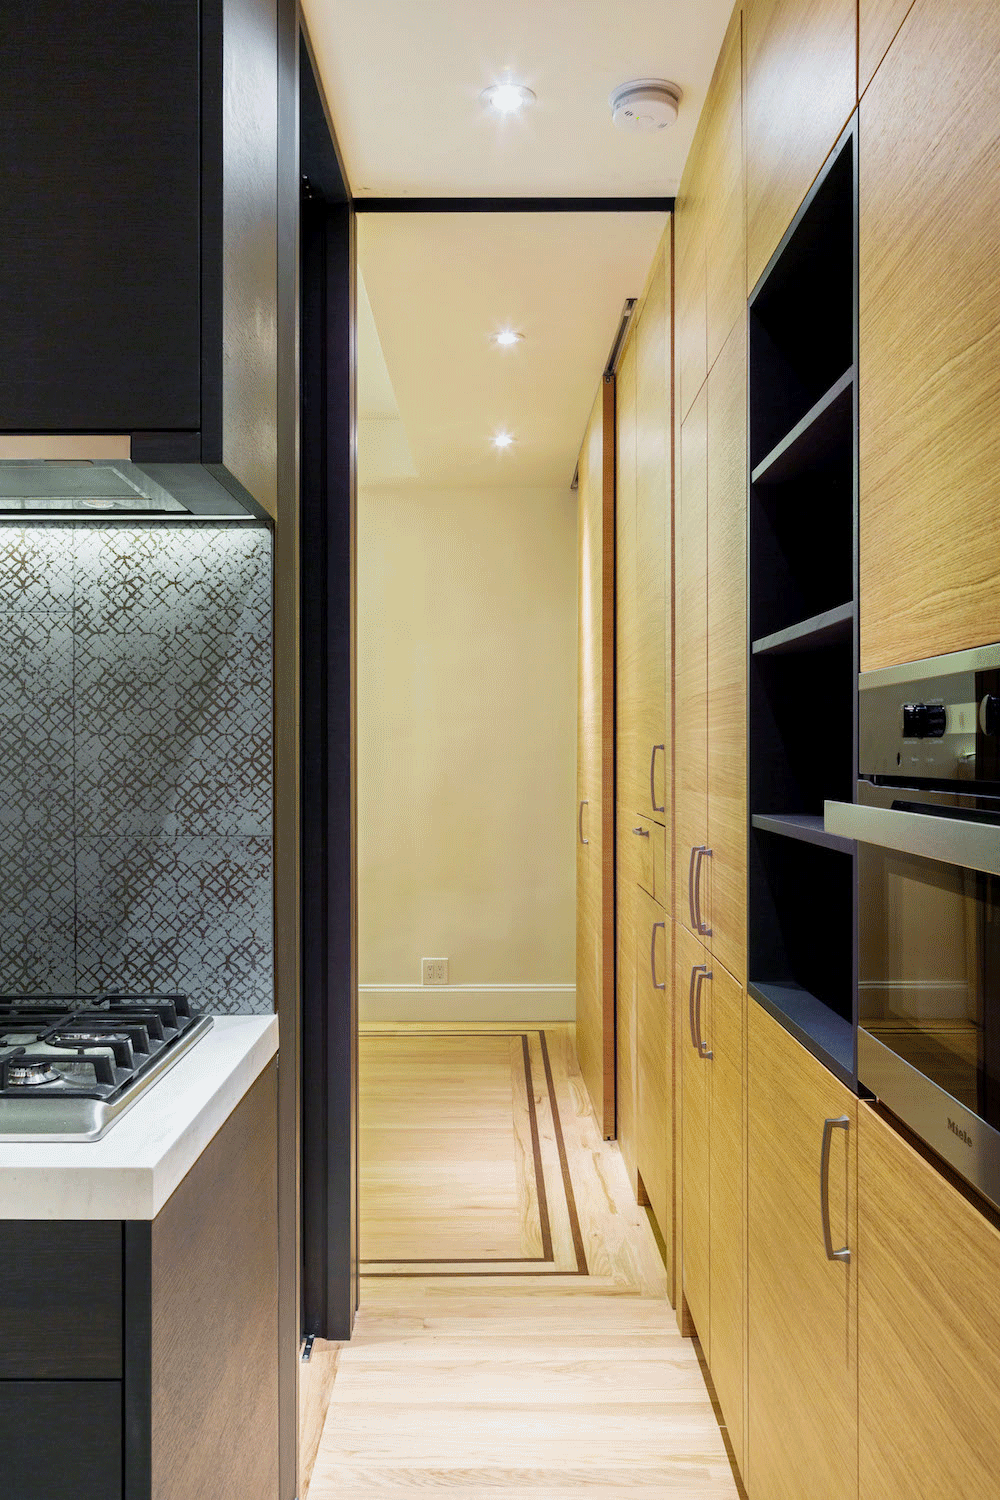 wood veneer custom cabinets in kitchen and bedroom after renovation